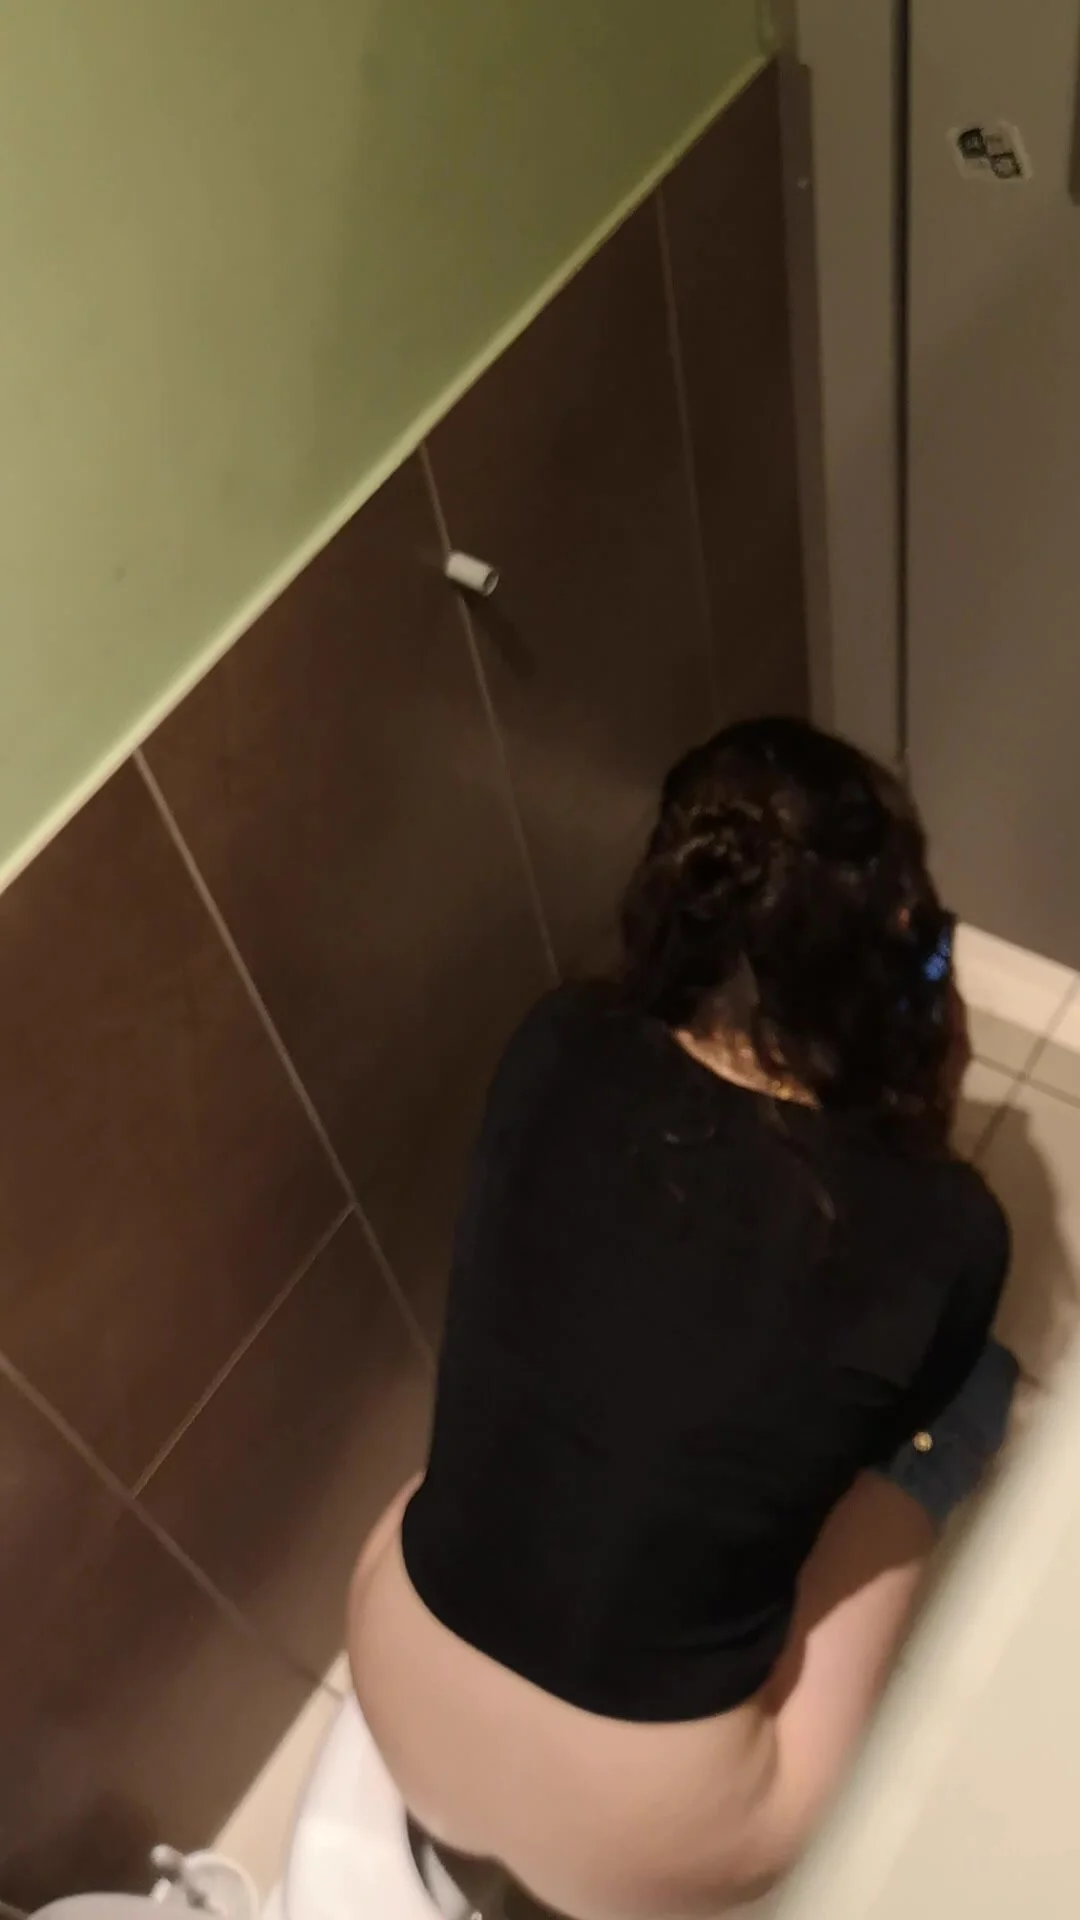 hidden voyeur toilet cams shitting2 Adult Pictures